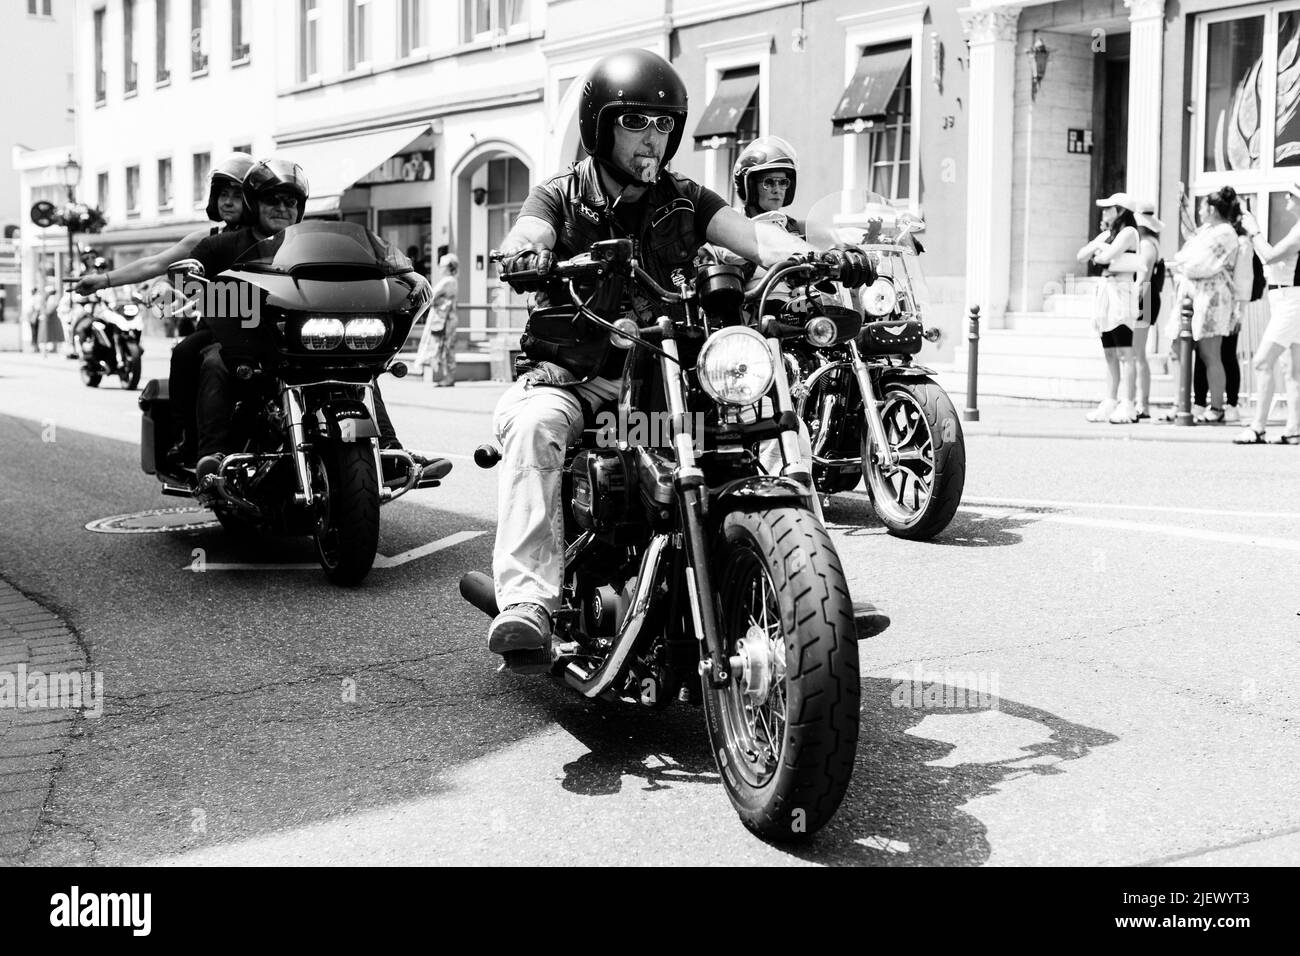 Magic Bikes Rudesheim, one of Europe's biggest Harley Davidson events in the Rhine Valley world heritage region. Harley & vintage bike rally, Germany Stock Photo